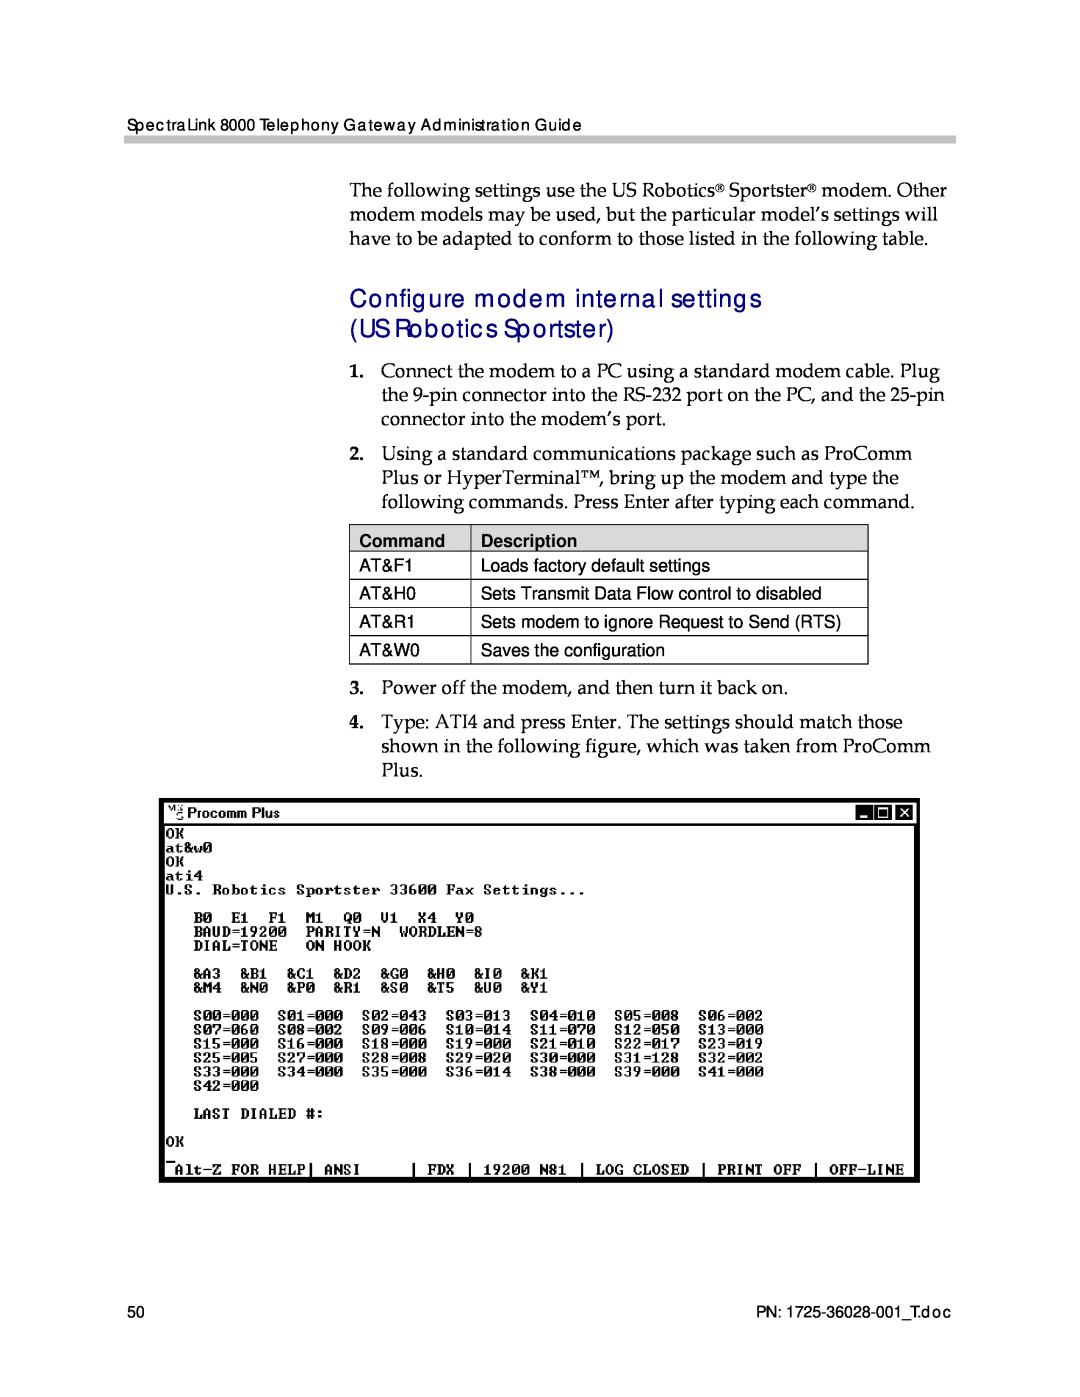 Polycom 1725-36028-001 manual Configure modem internal settings US Robotics Sportster 